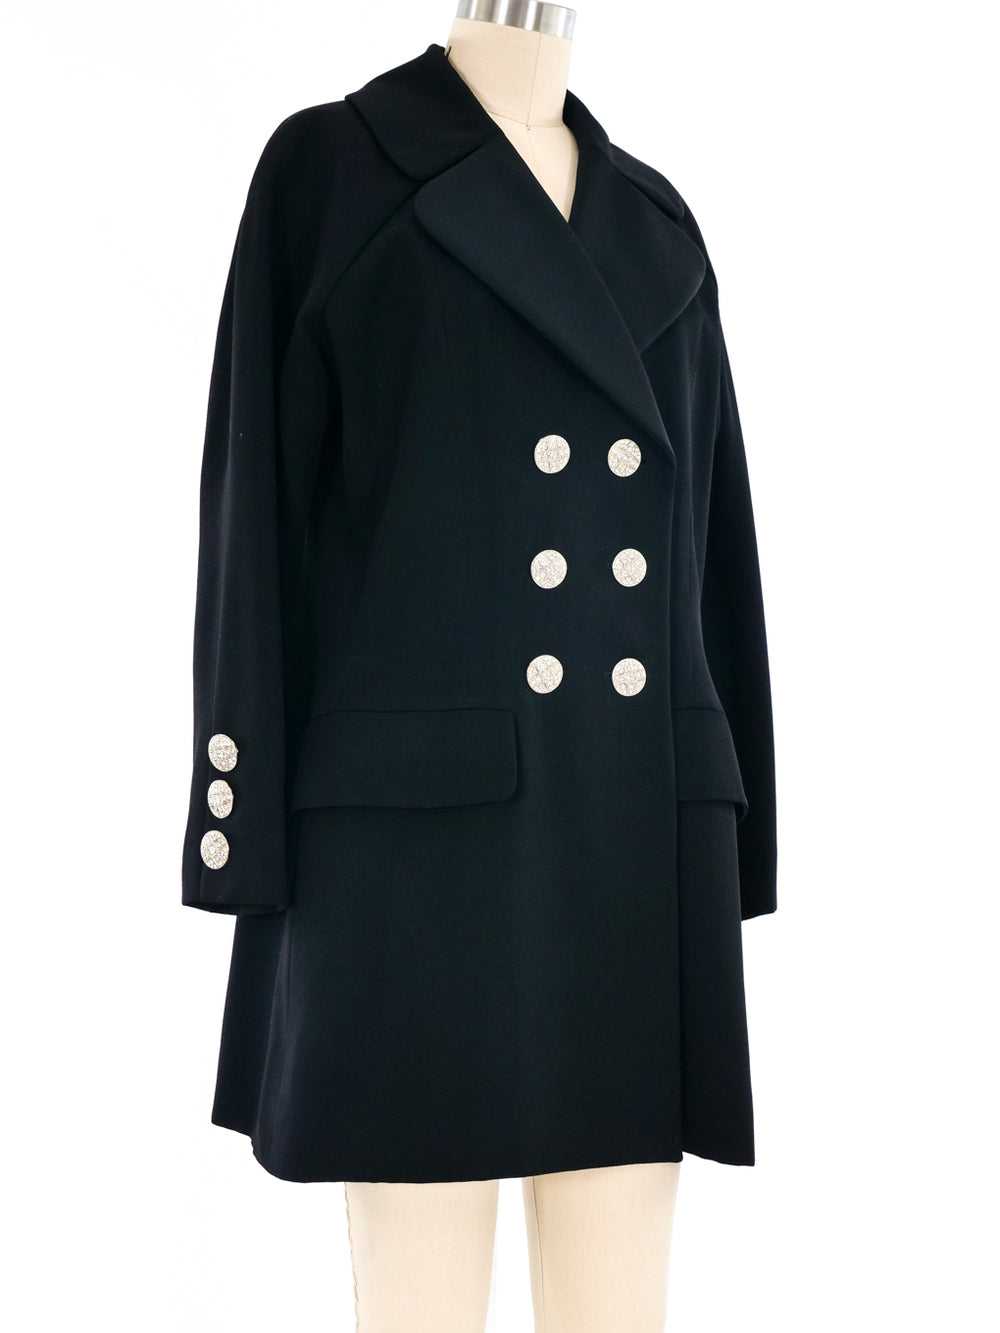 Yves Saint Laurent Wool Evening Jacket - image 3